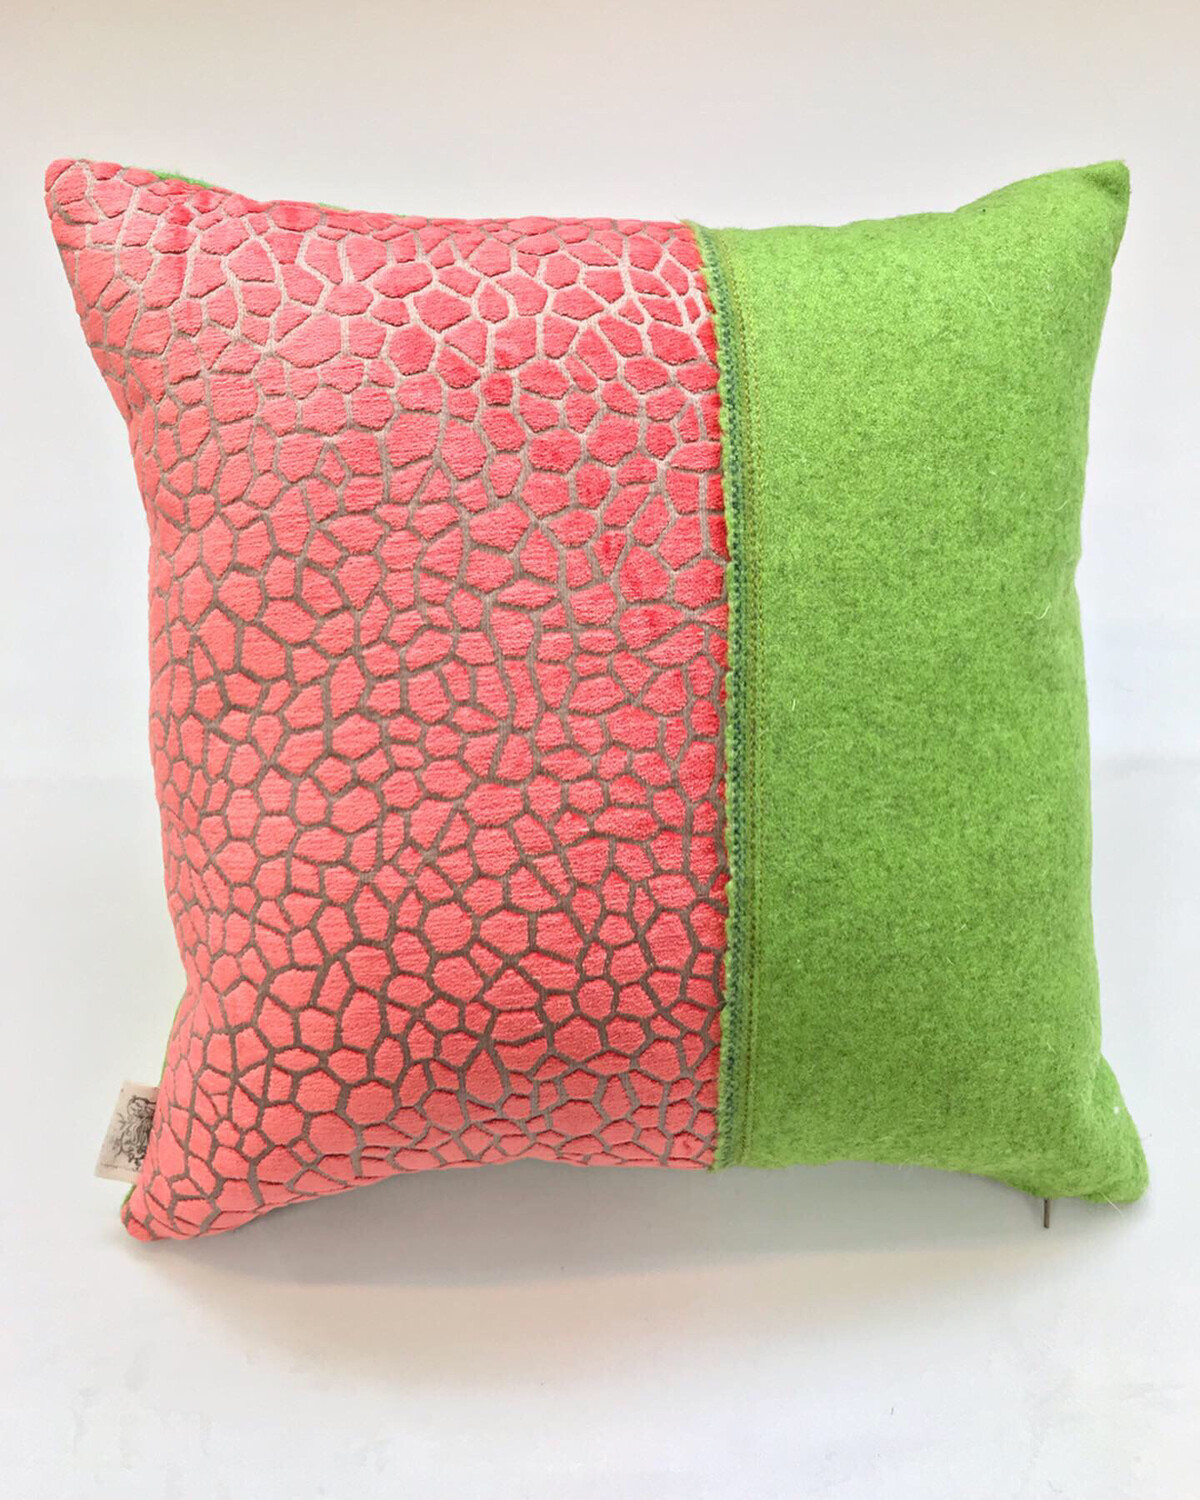 Coral & Capisoli Selvedge” Scatter cushion